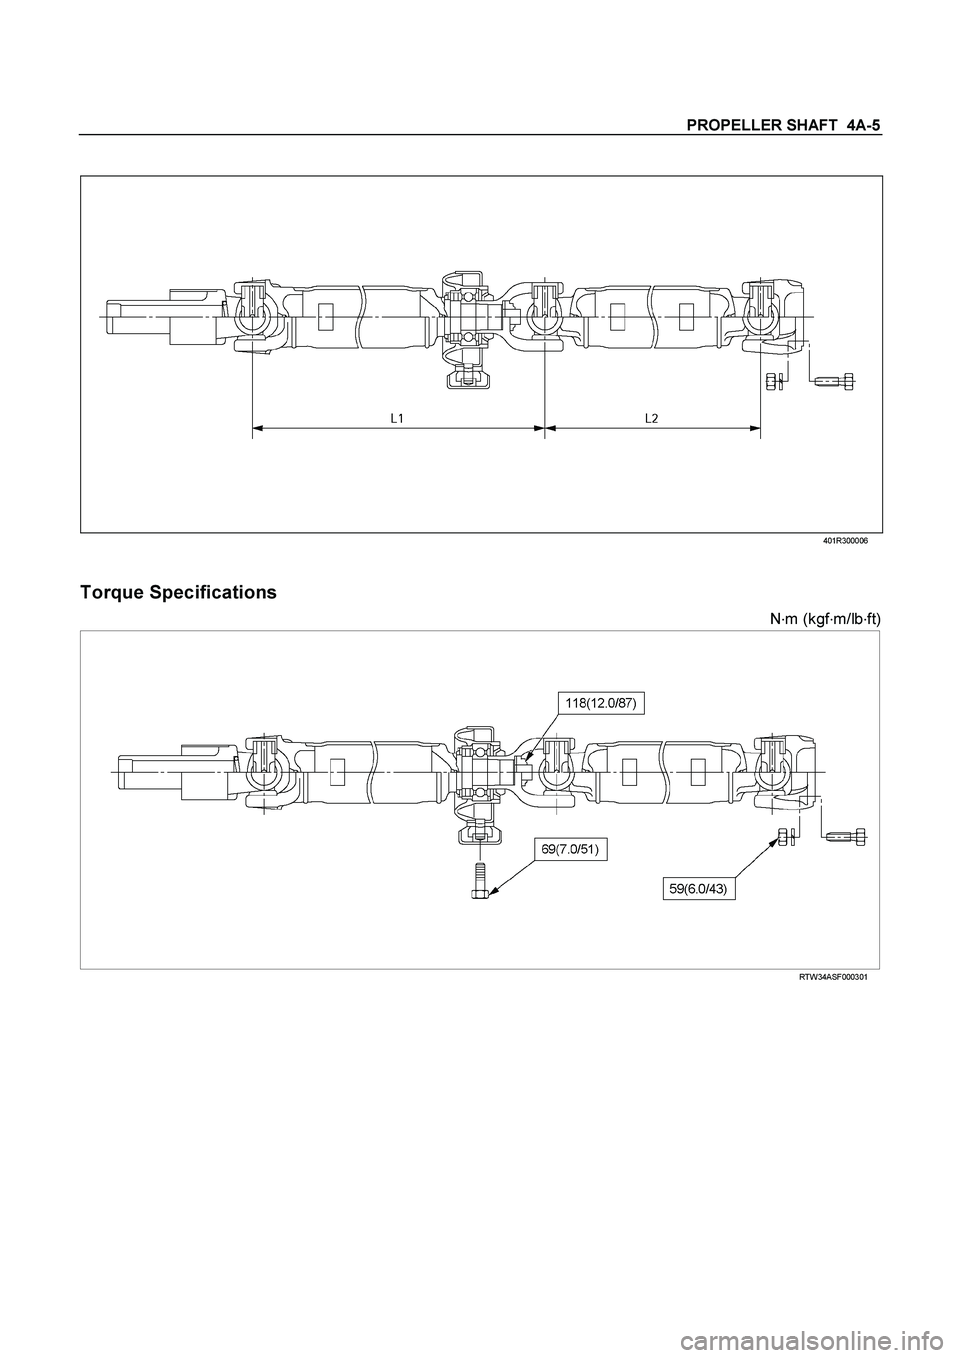 ISUZU TF SERIES 2004  Workshop Manual PROPELLER SHAFT  4A-5 
 
 401R300006 
 
 
Torque Specifications 
N
m (kgf
m/lb
ft) 
 RTW34ASF000301 
  